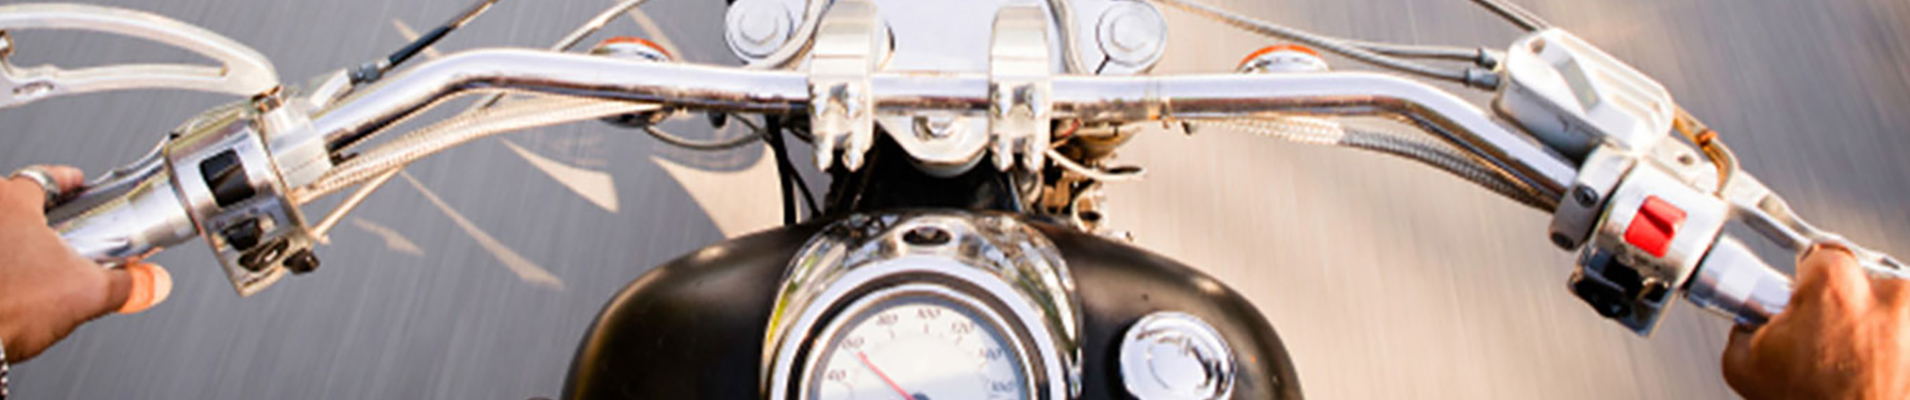 Arkansas Motorcycle insurance coverage